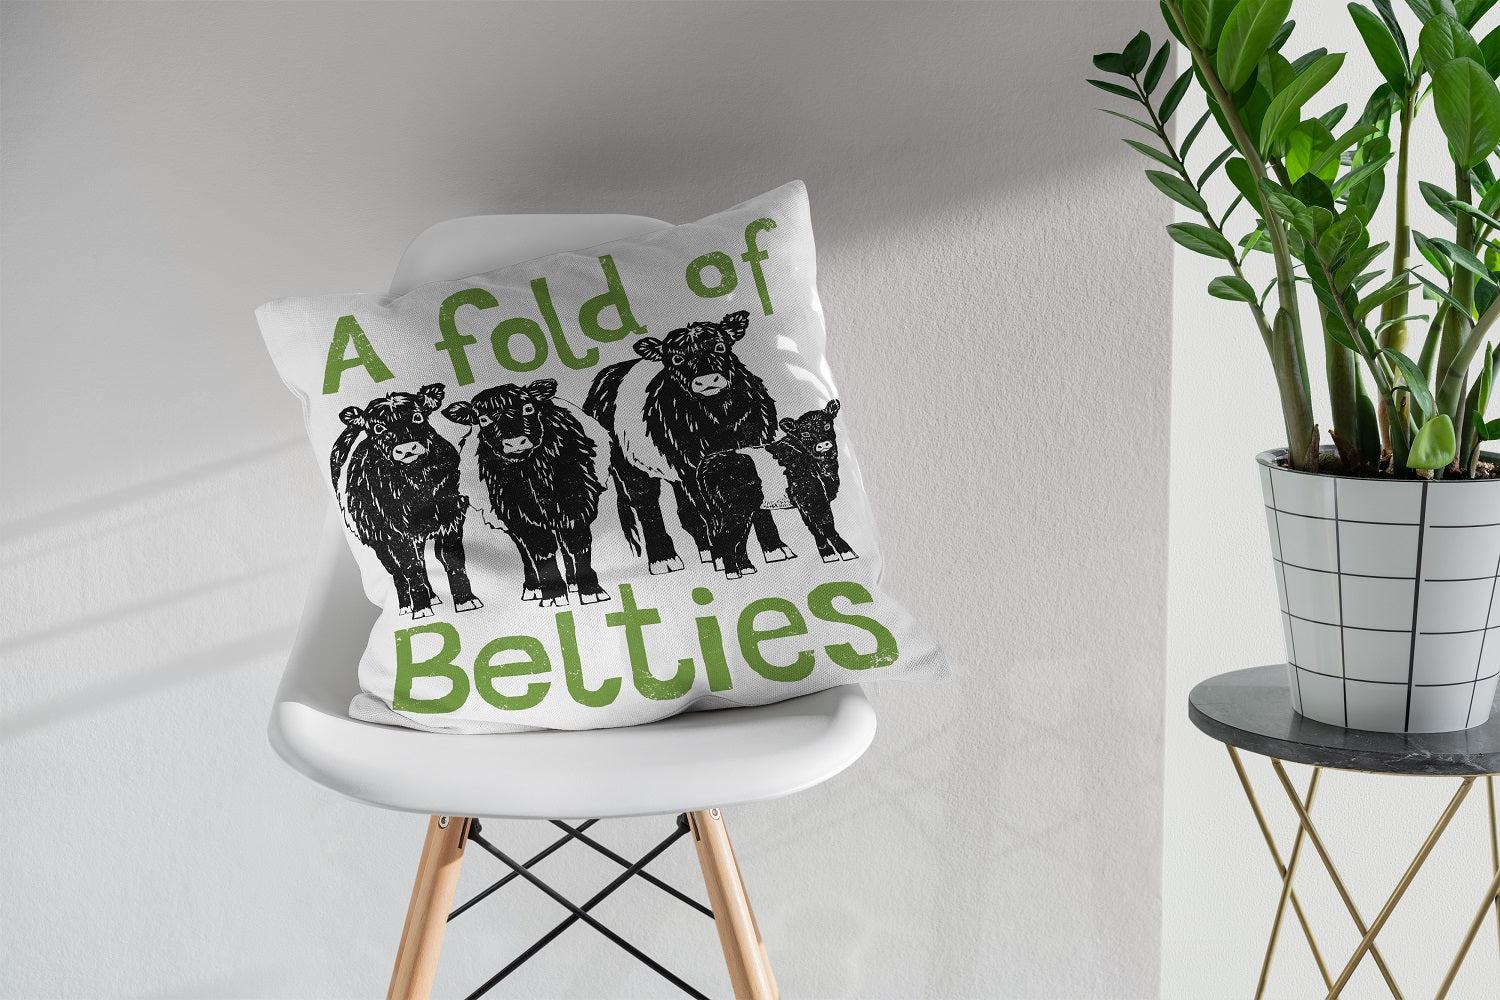 Fold of Belties - Collective Noun Cushion